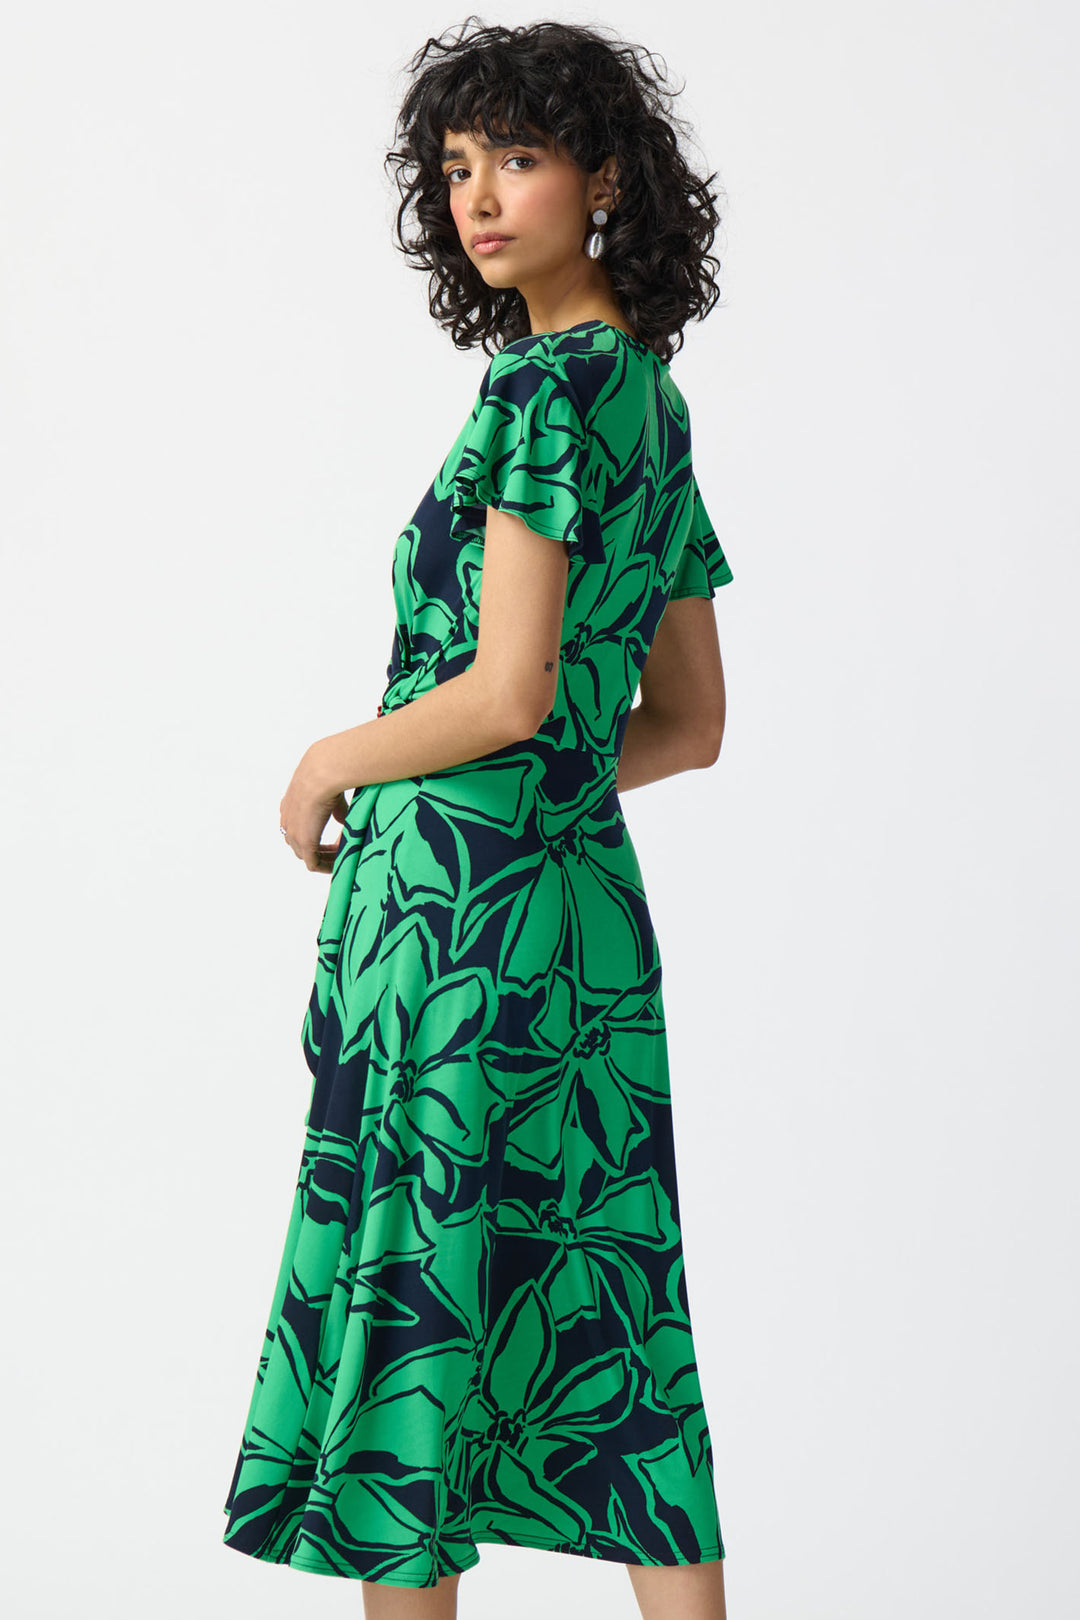 Joseph Ribkoff 241052 Green Floral Print Jersey Wrap Dress - Dotique Chesterfield